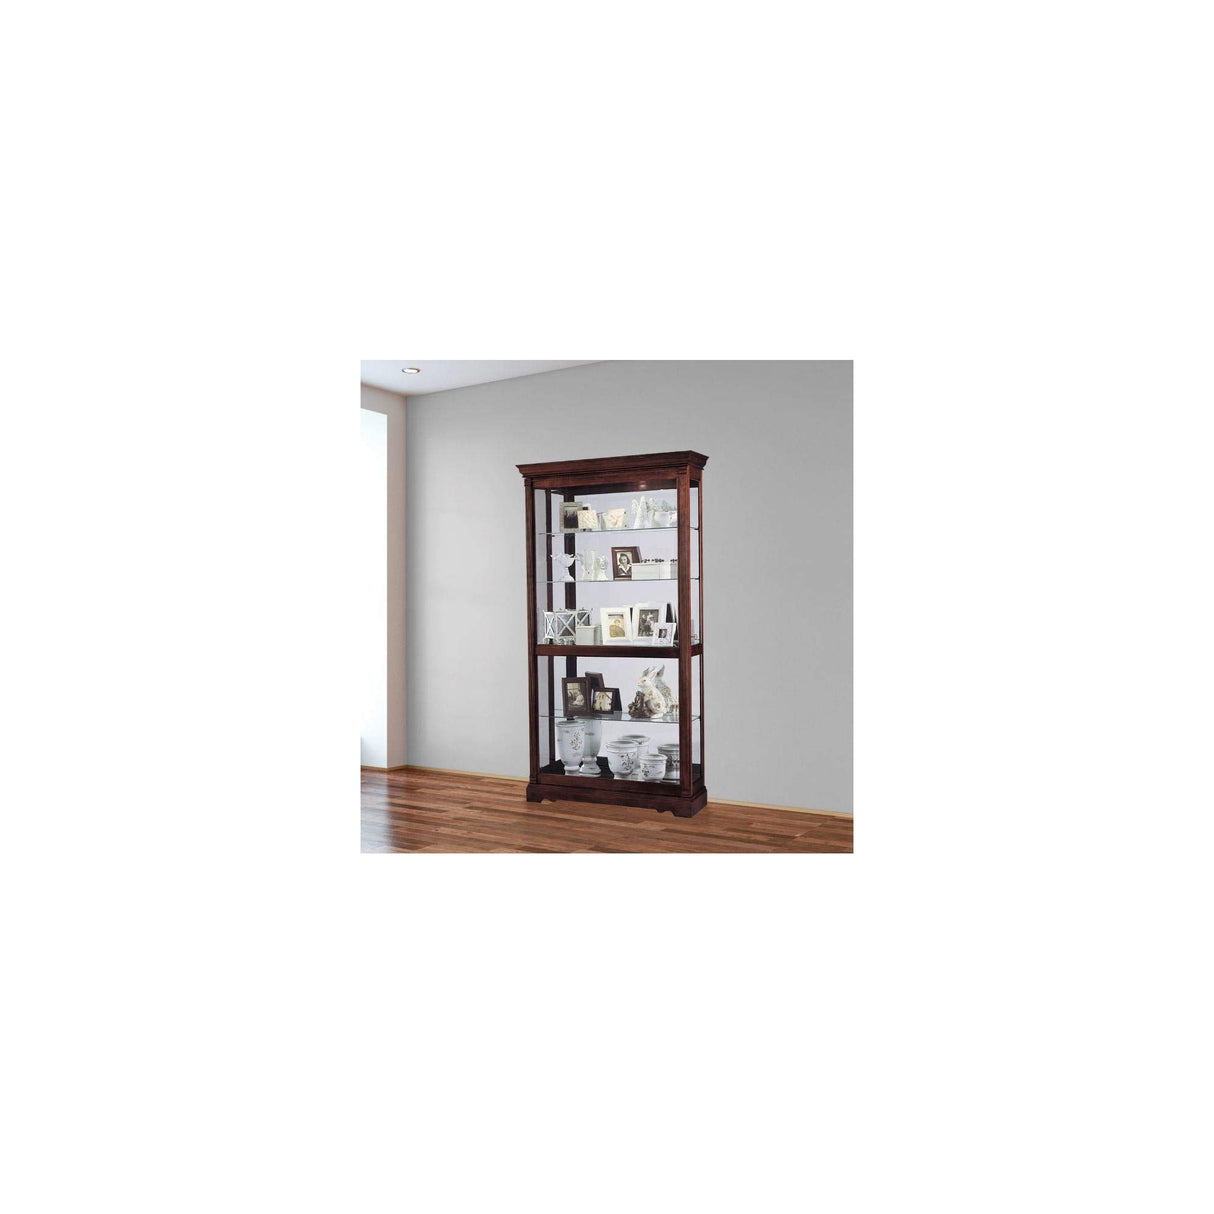 Howard Miller Dublin Curio Cabinet 680-337 - Windsor Cherry Finish Home Decor, Four Glass Shelves, Five Level Display Case with Locking Slide Door & Halogen Light